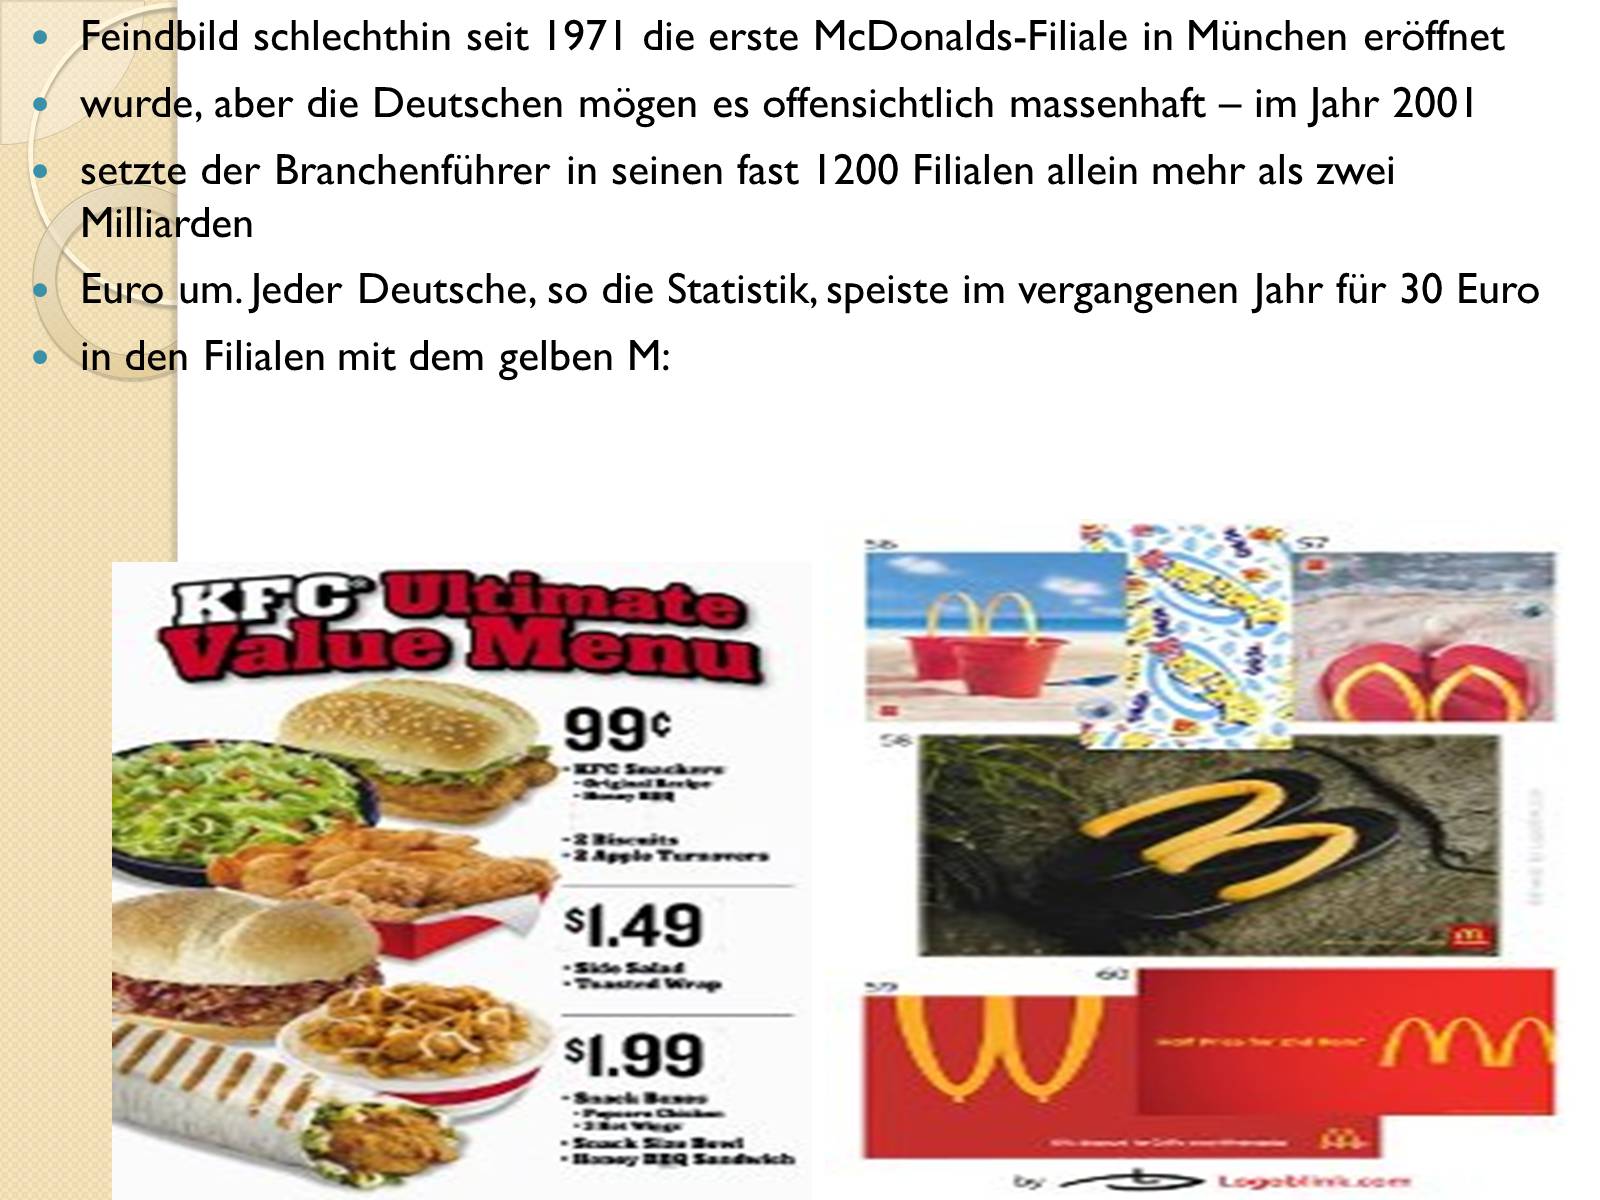 Презентація на тему «Fast Food in Deutschland» - Слайд #3